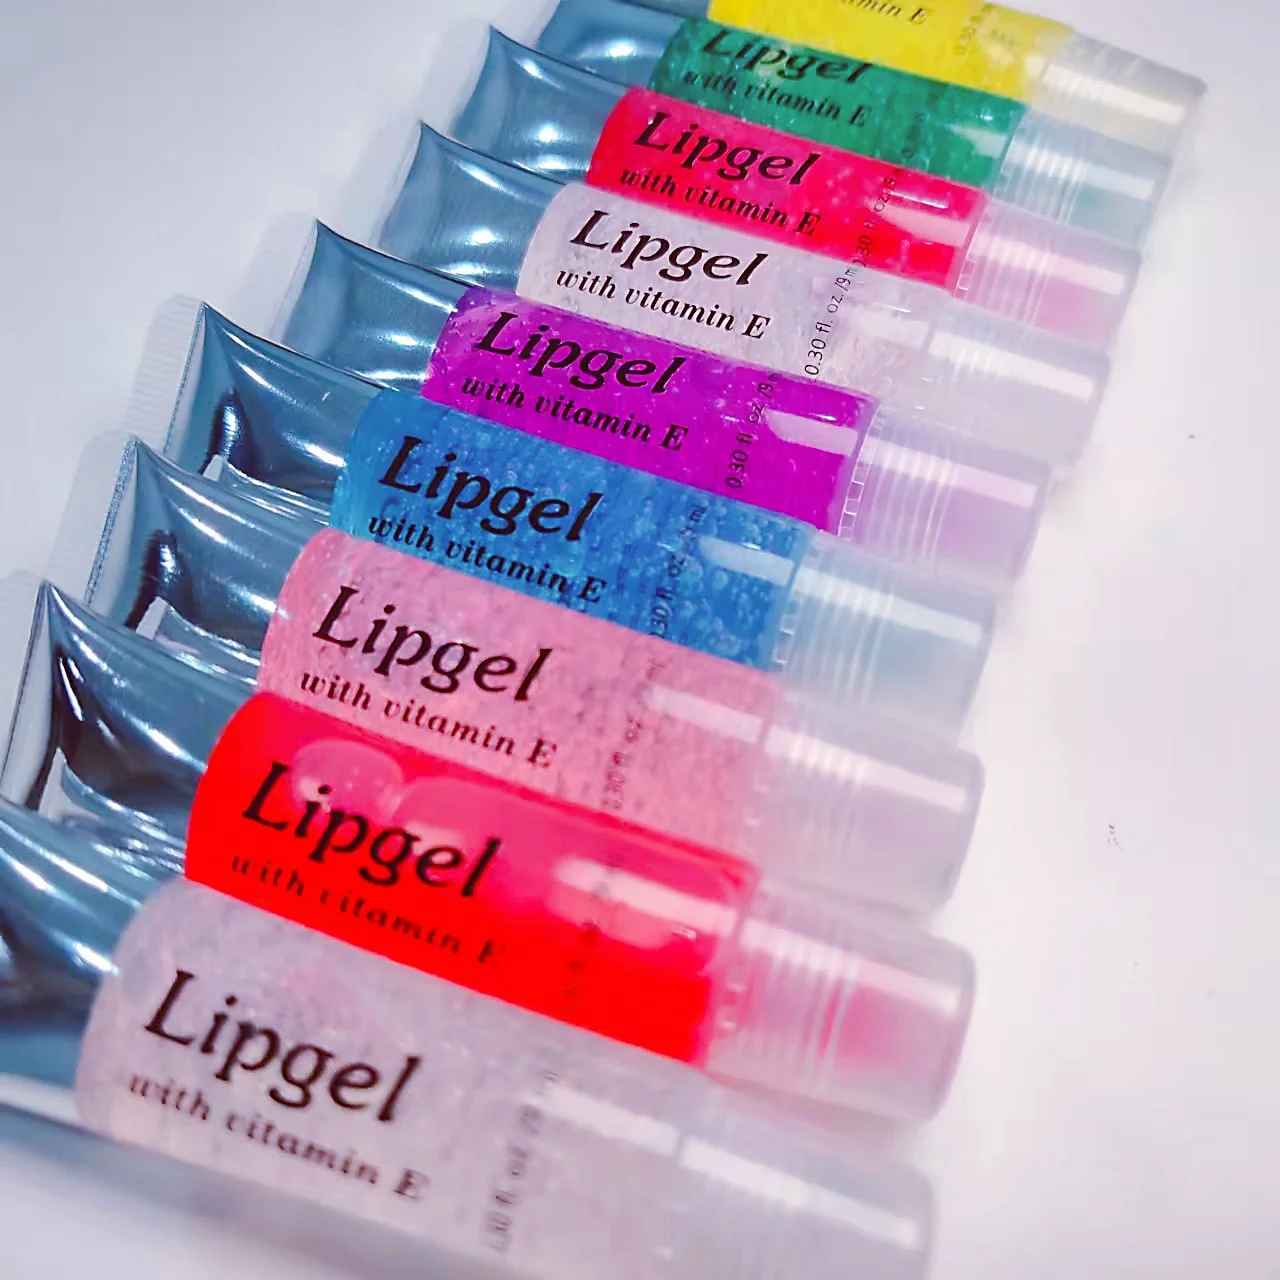 

Custom LOGO Small Keychains Cosmetics Clear Lipgloss Base Gel Vegan Lip Gloss Liptint Oil Organic Natural With Vitamins